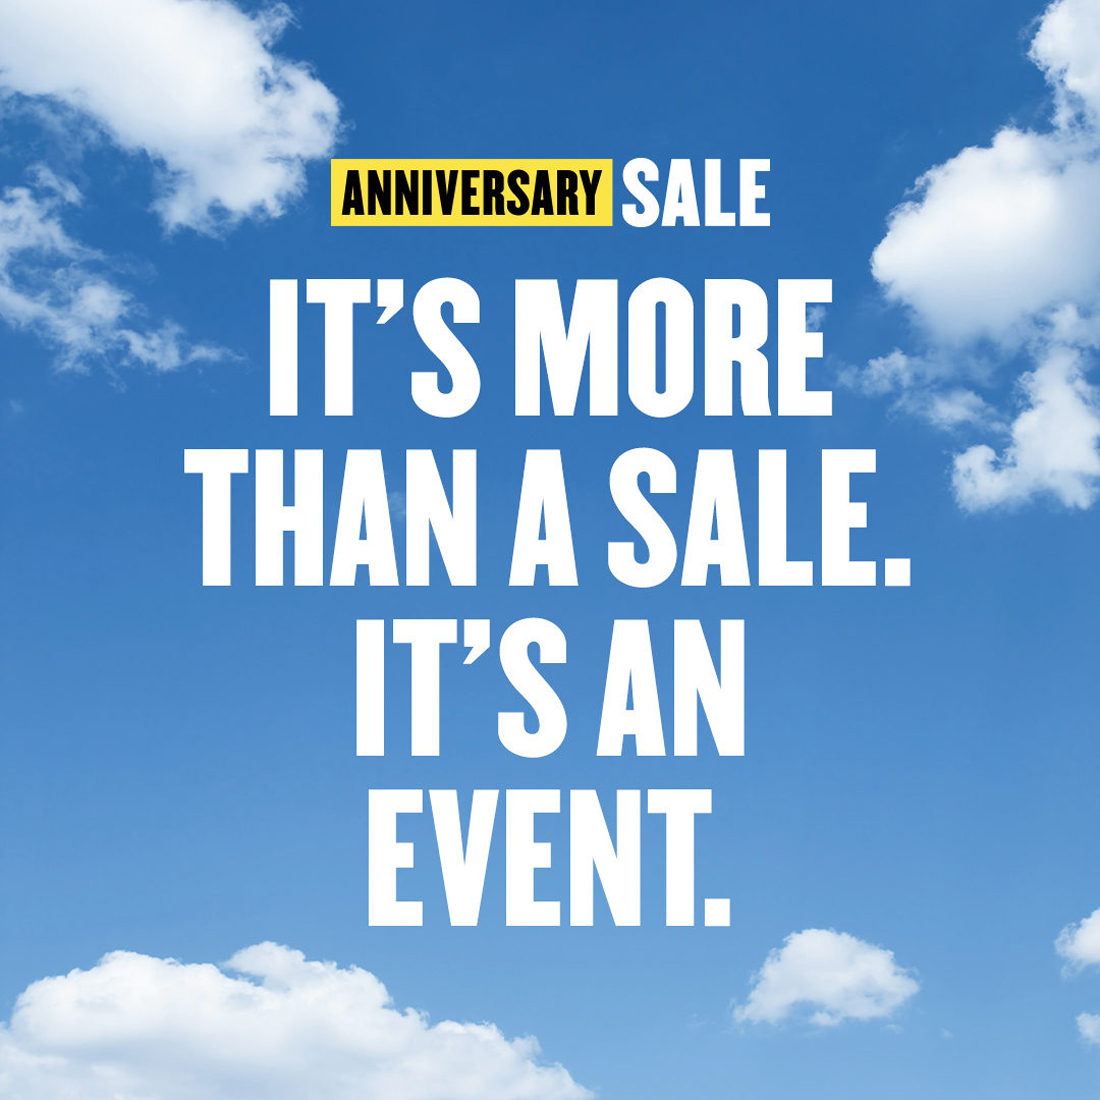 Nordstrom Anniversary Sale 2024